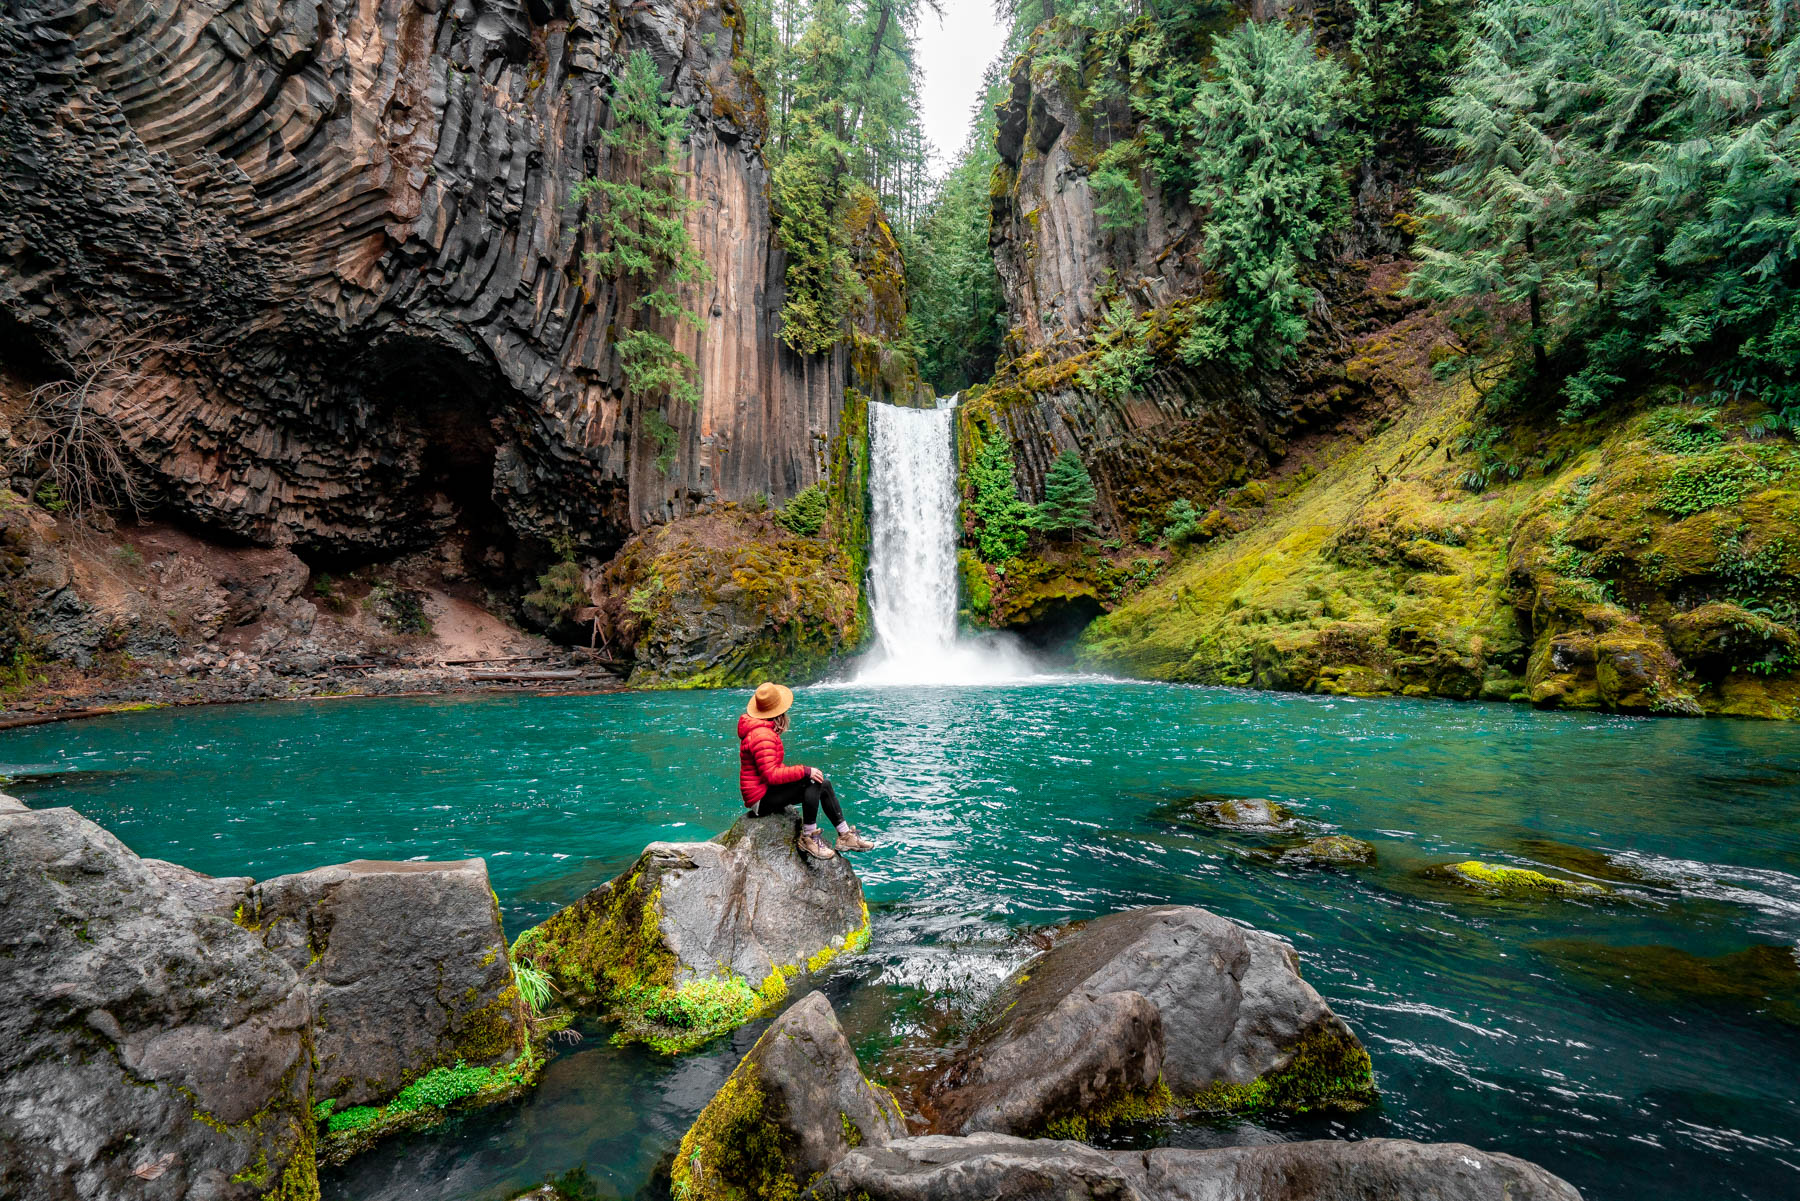 The best waterfalls in Oregon
Toketee Falls
